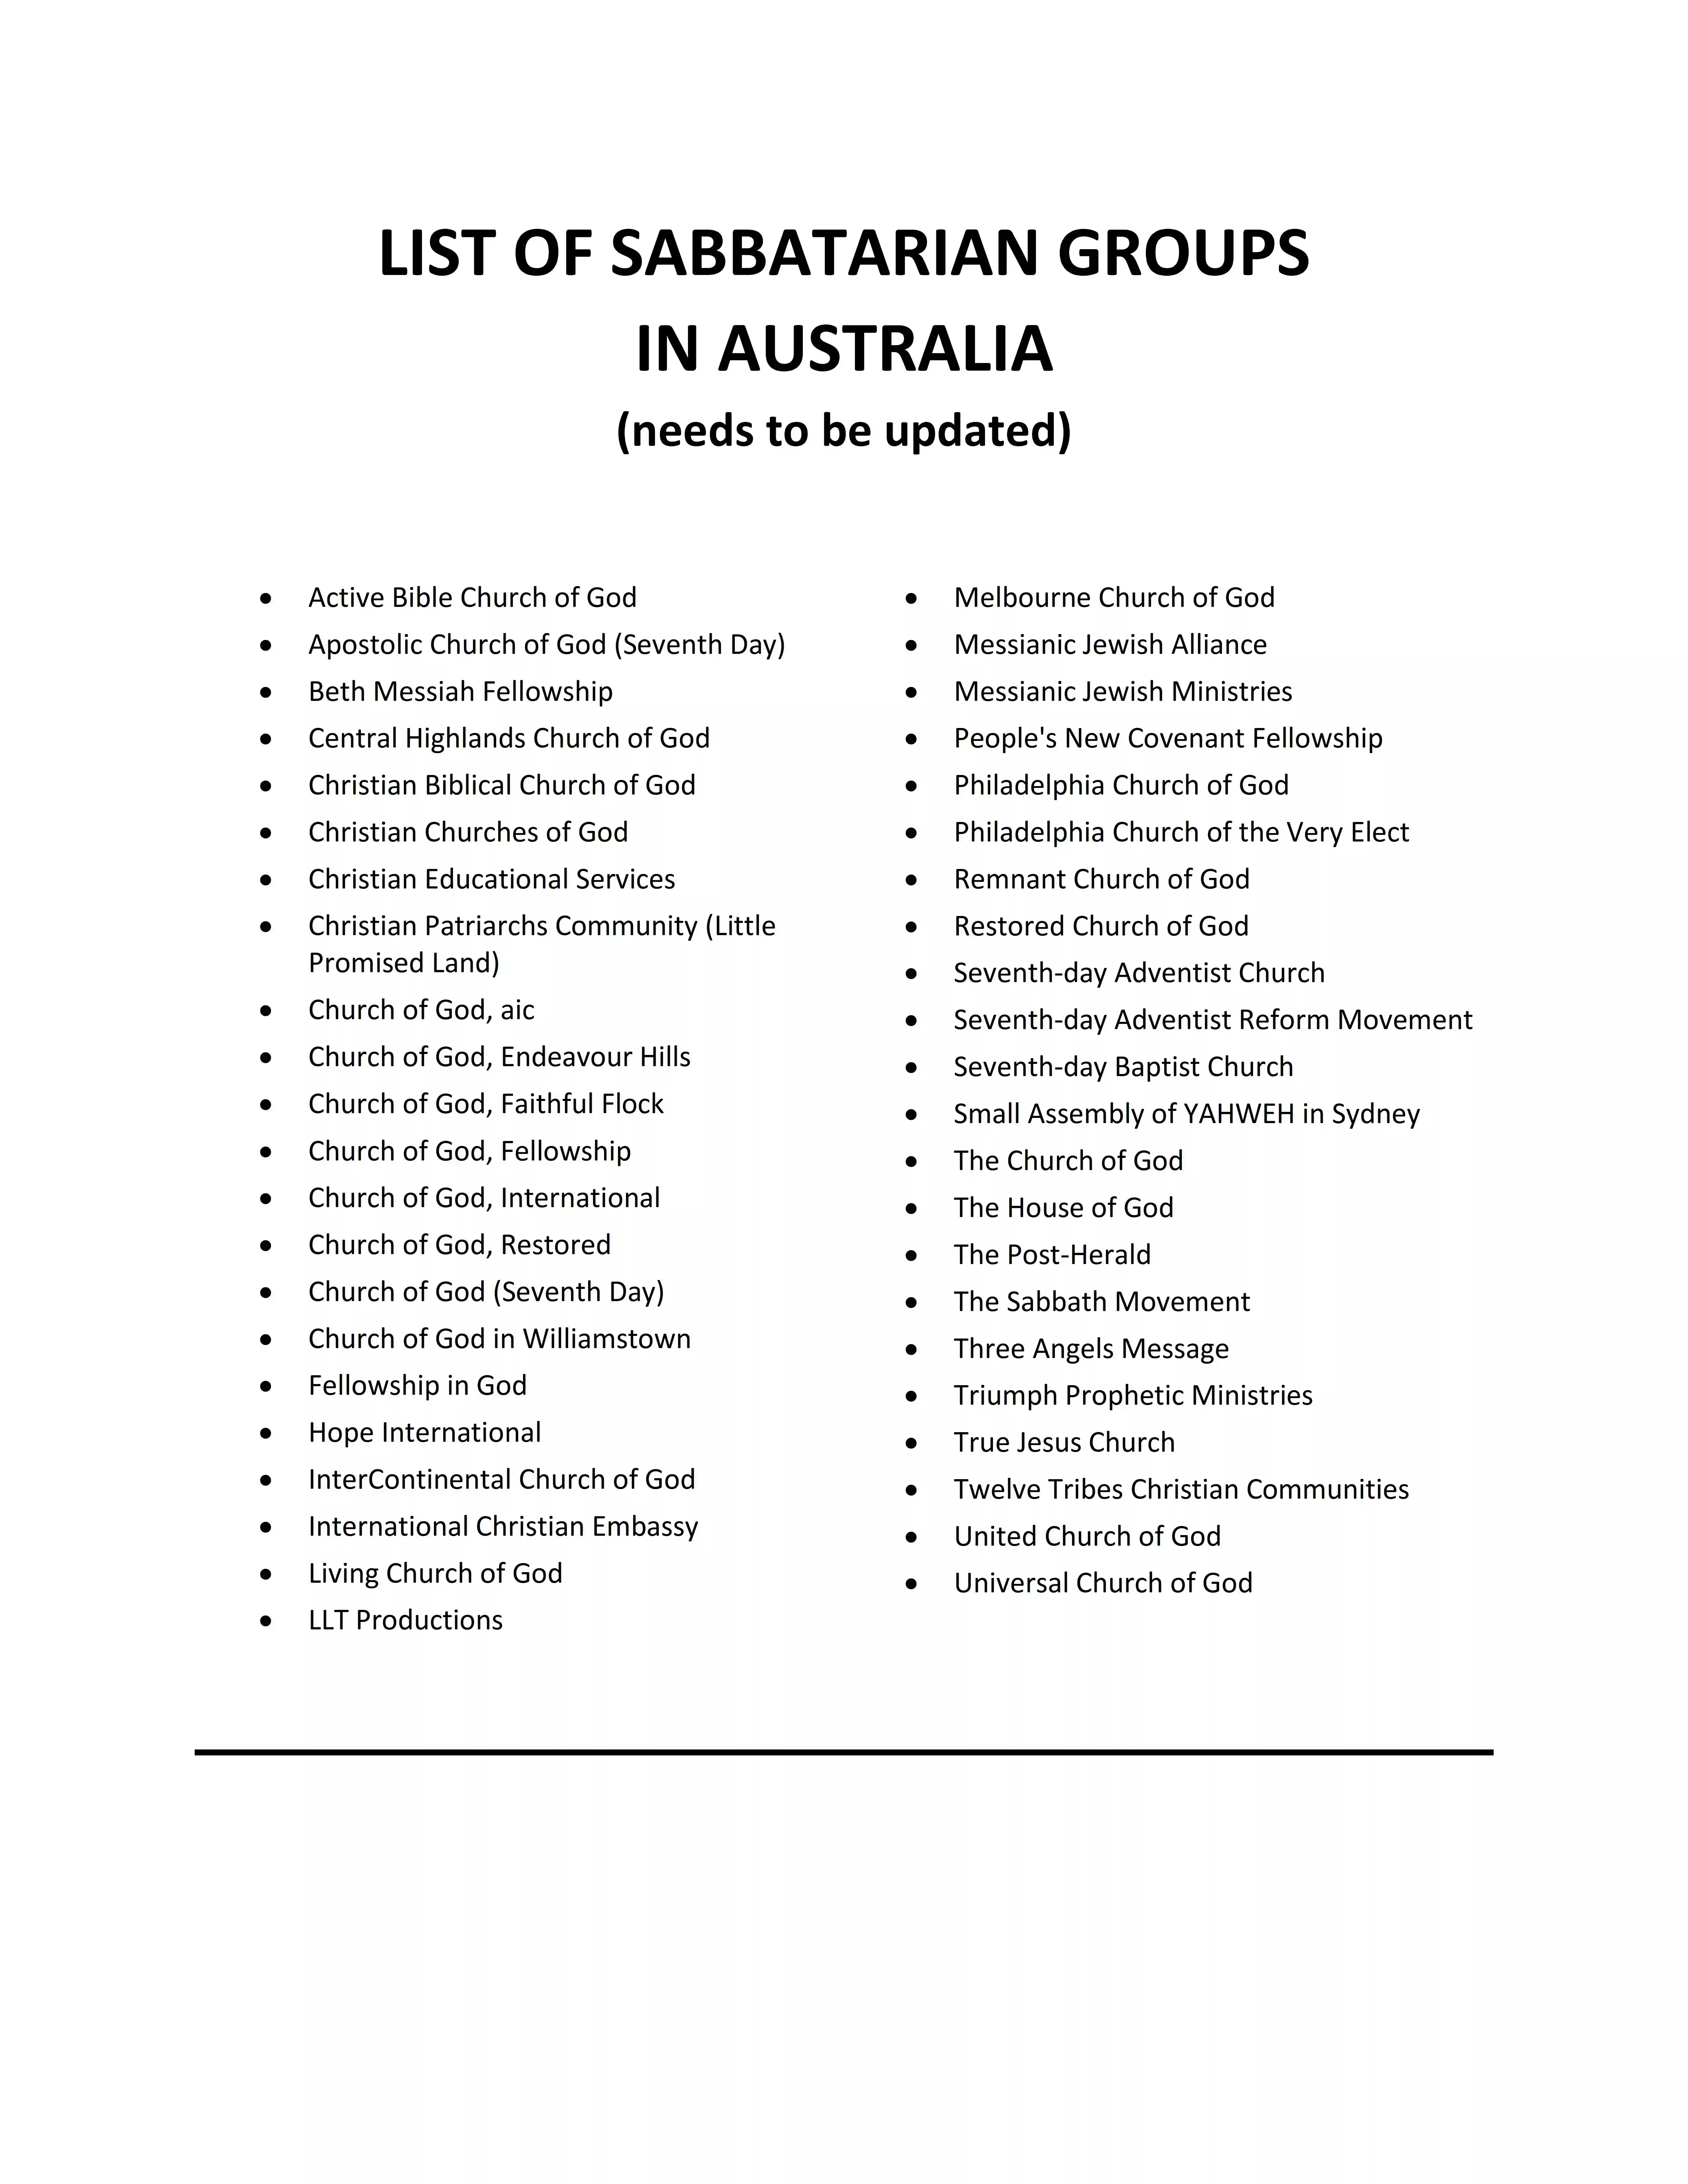 List of Aus Groups